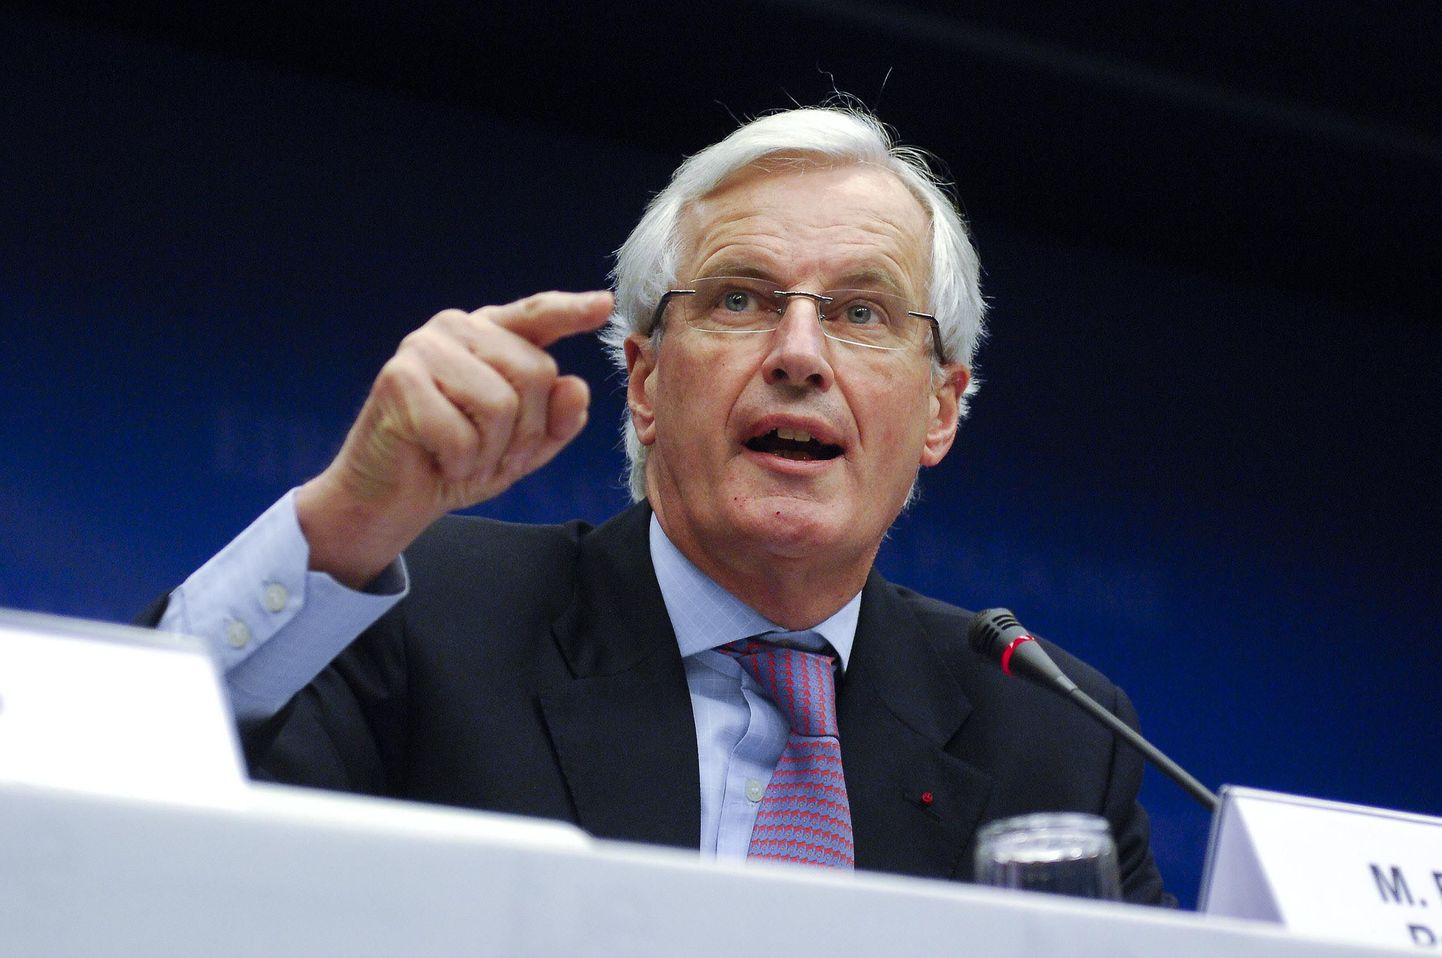 Michel Barnier